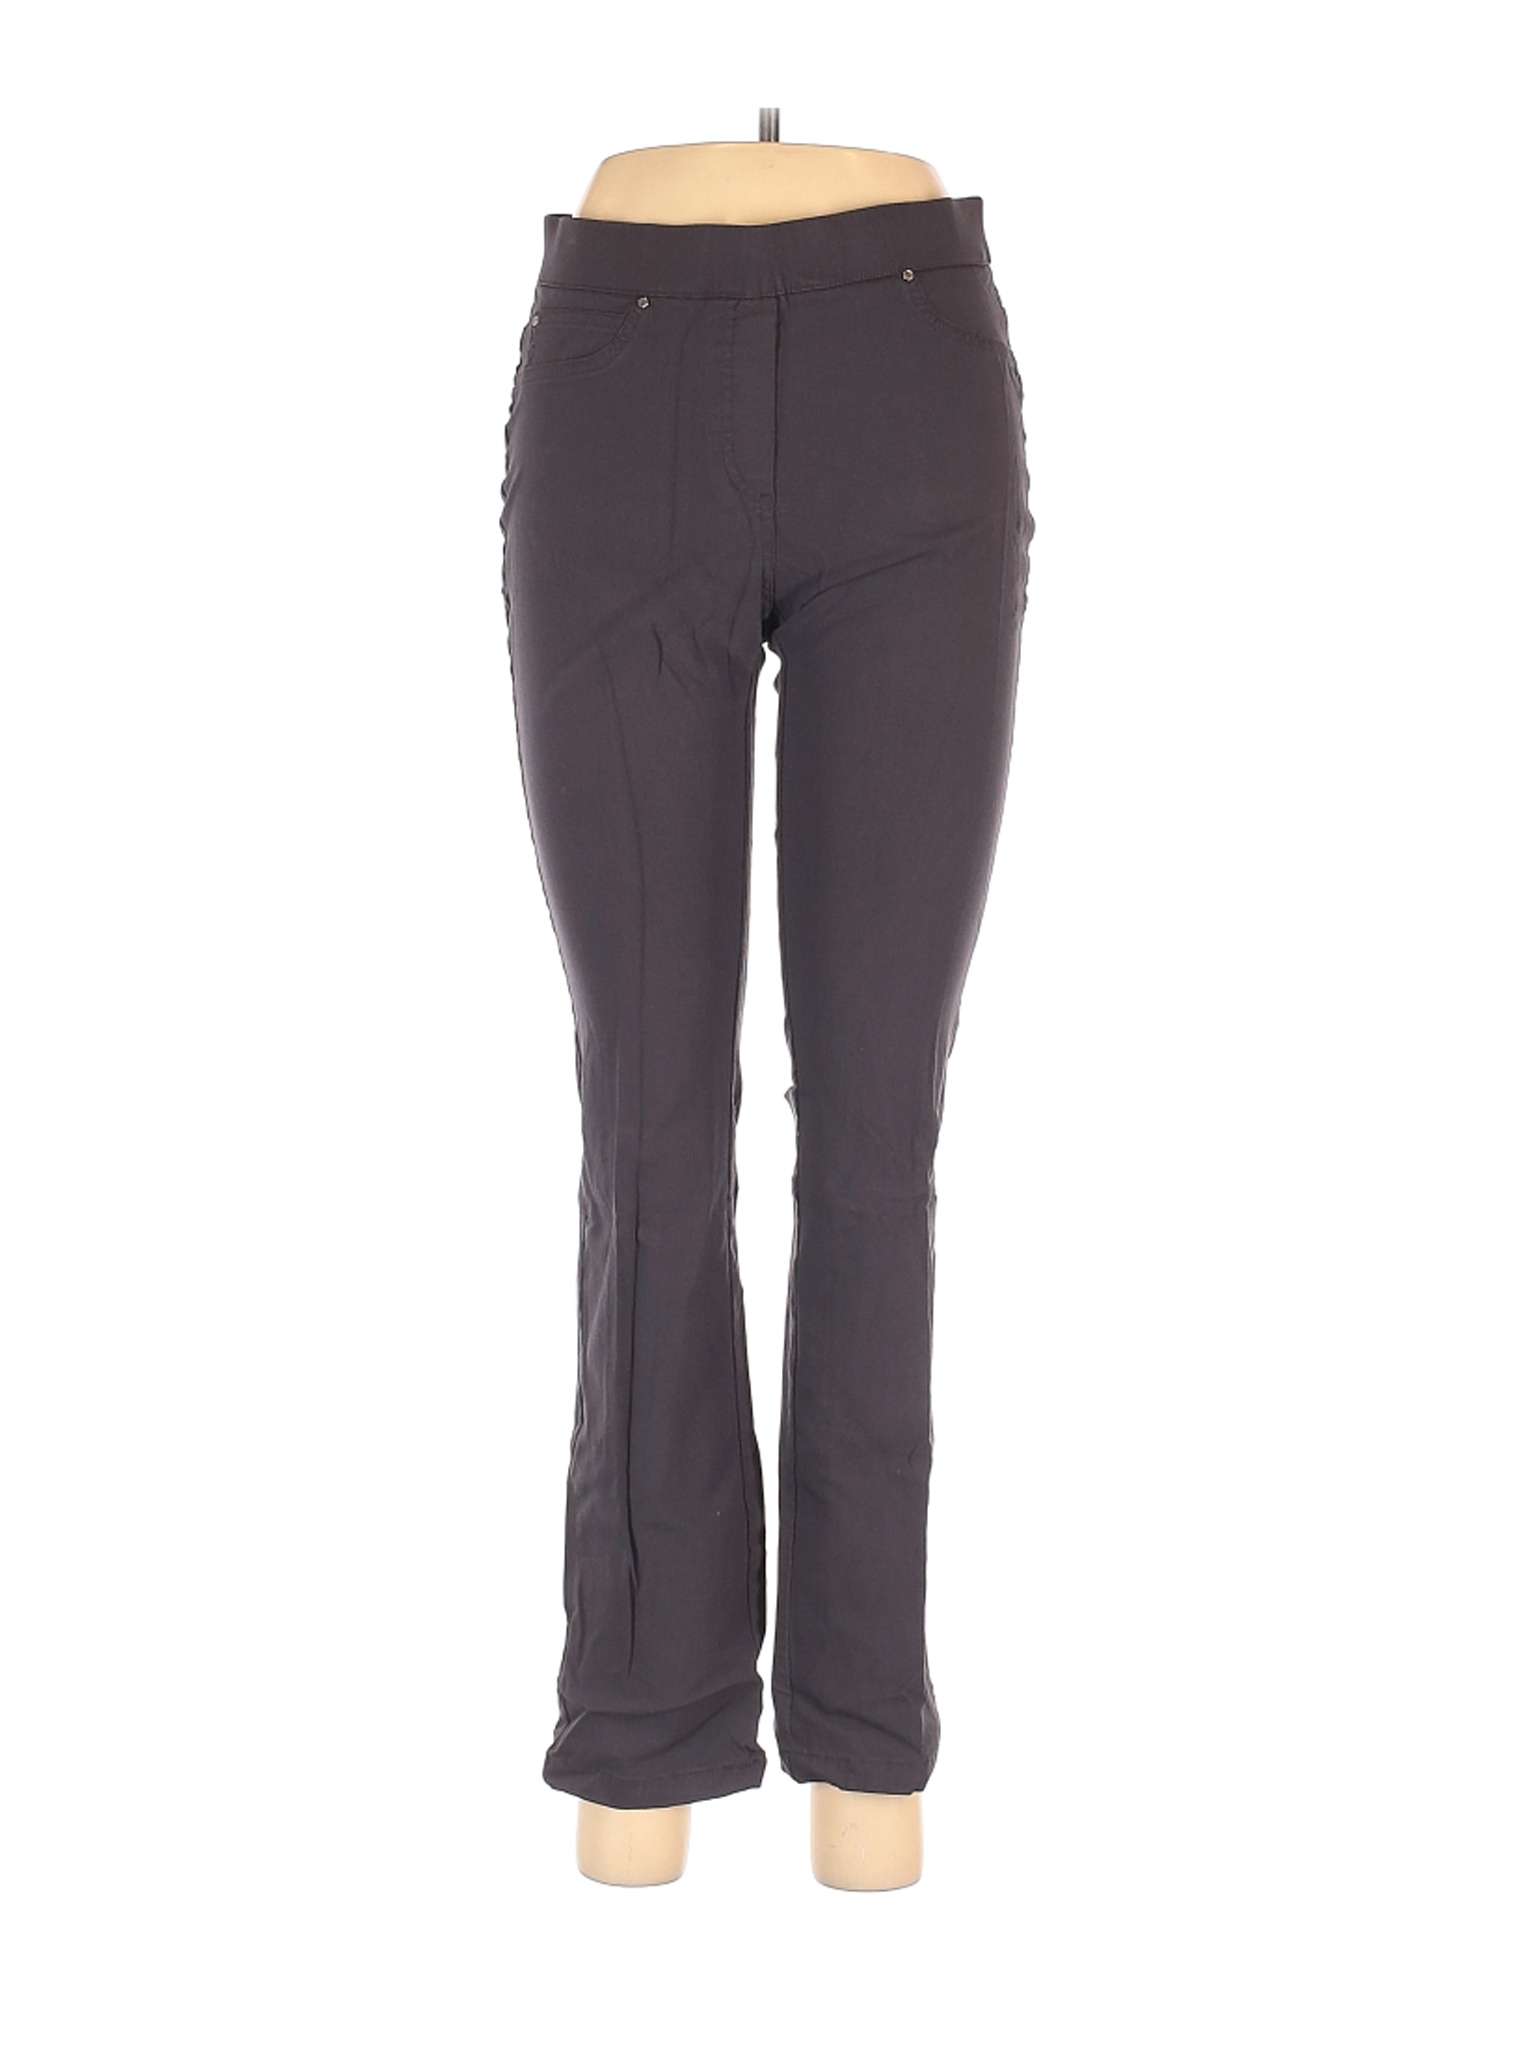 Rafaella Women Gray Casual Pants 6 | eBay